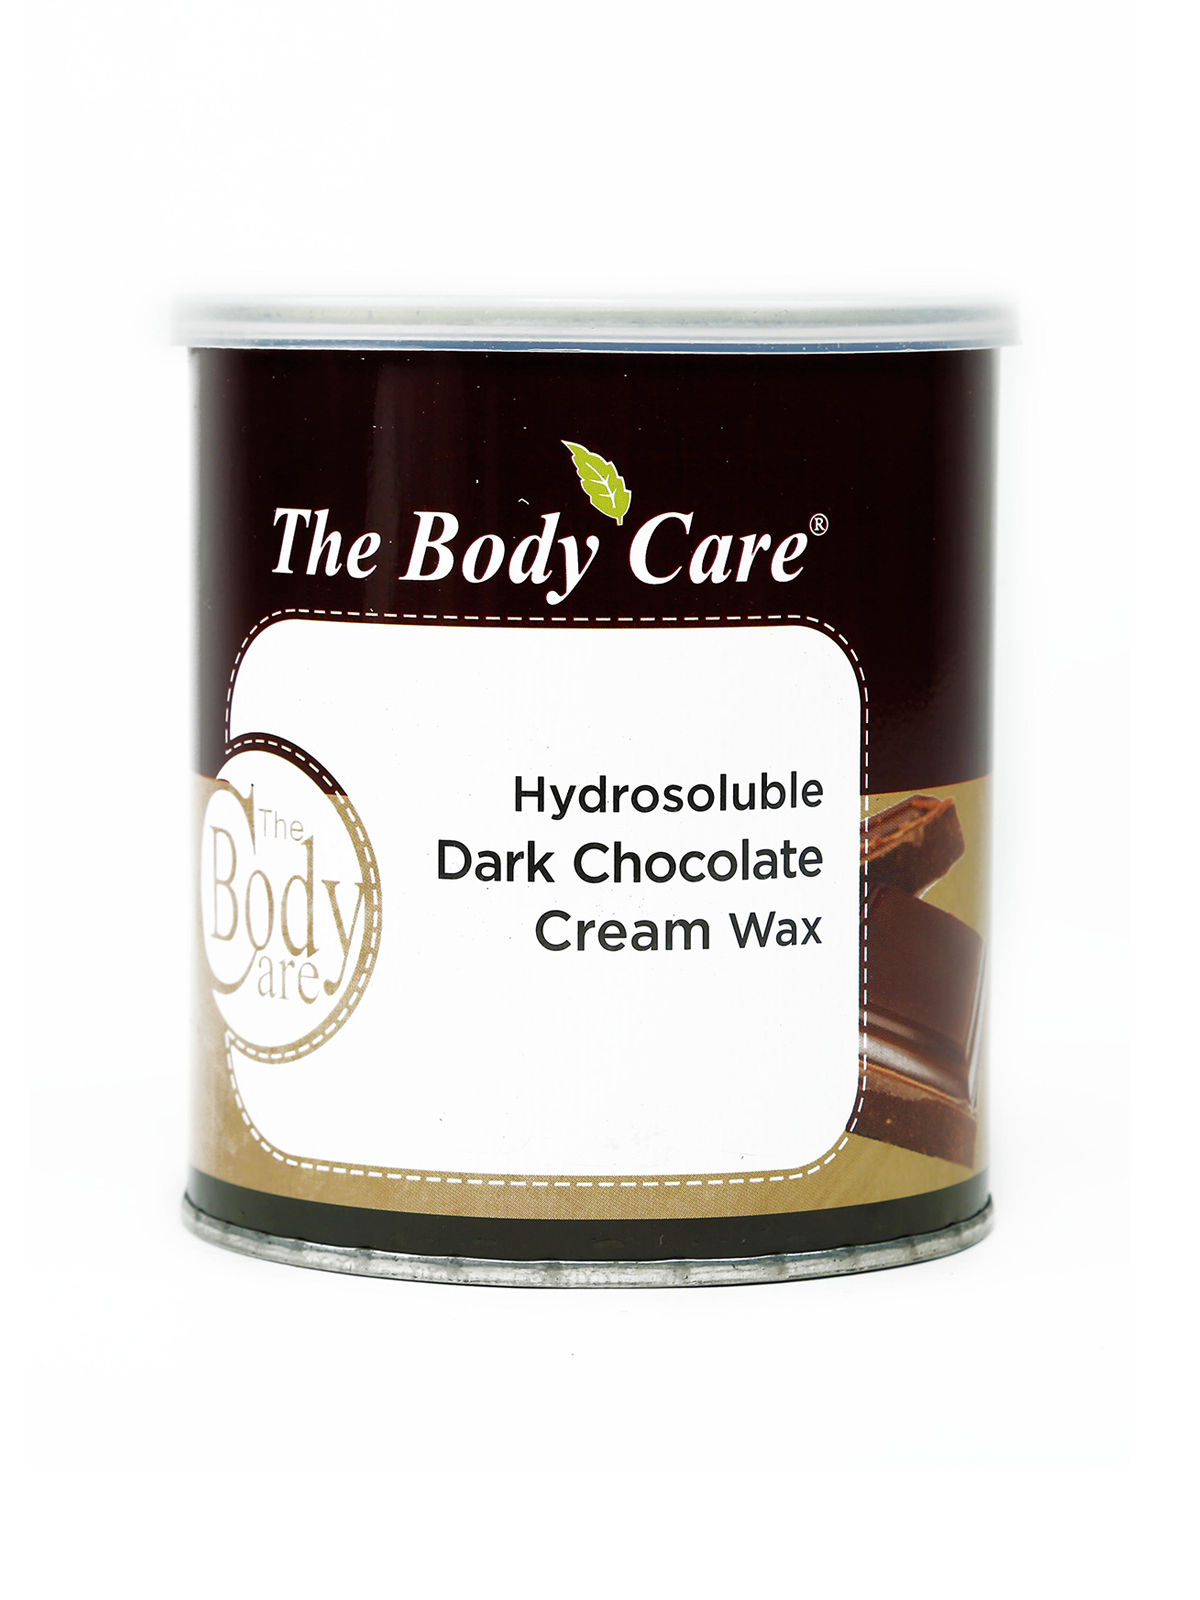 The Body Care Dark Chocolate Hydrosoluble Cream Wax